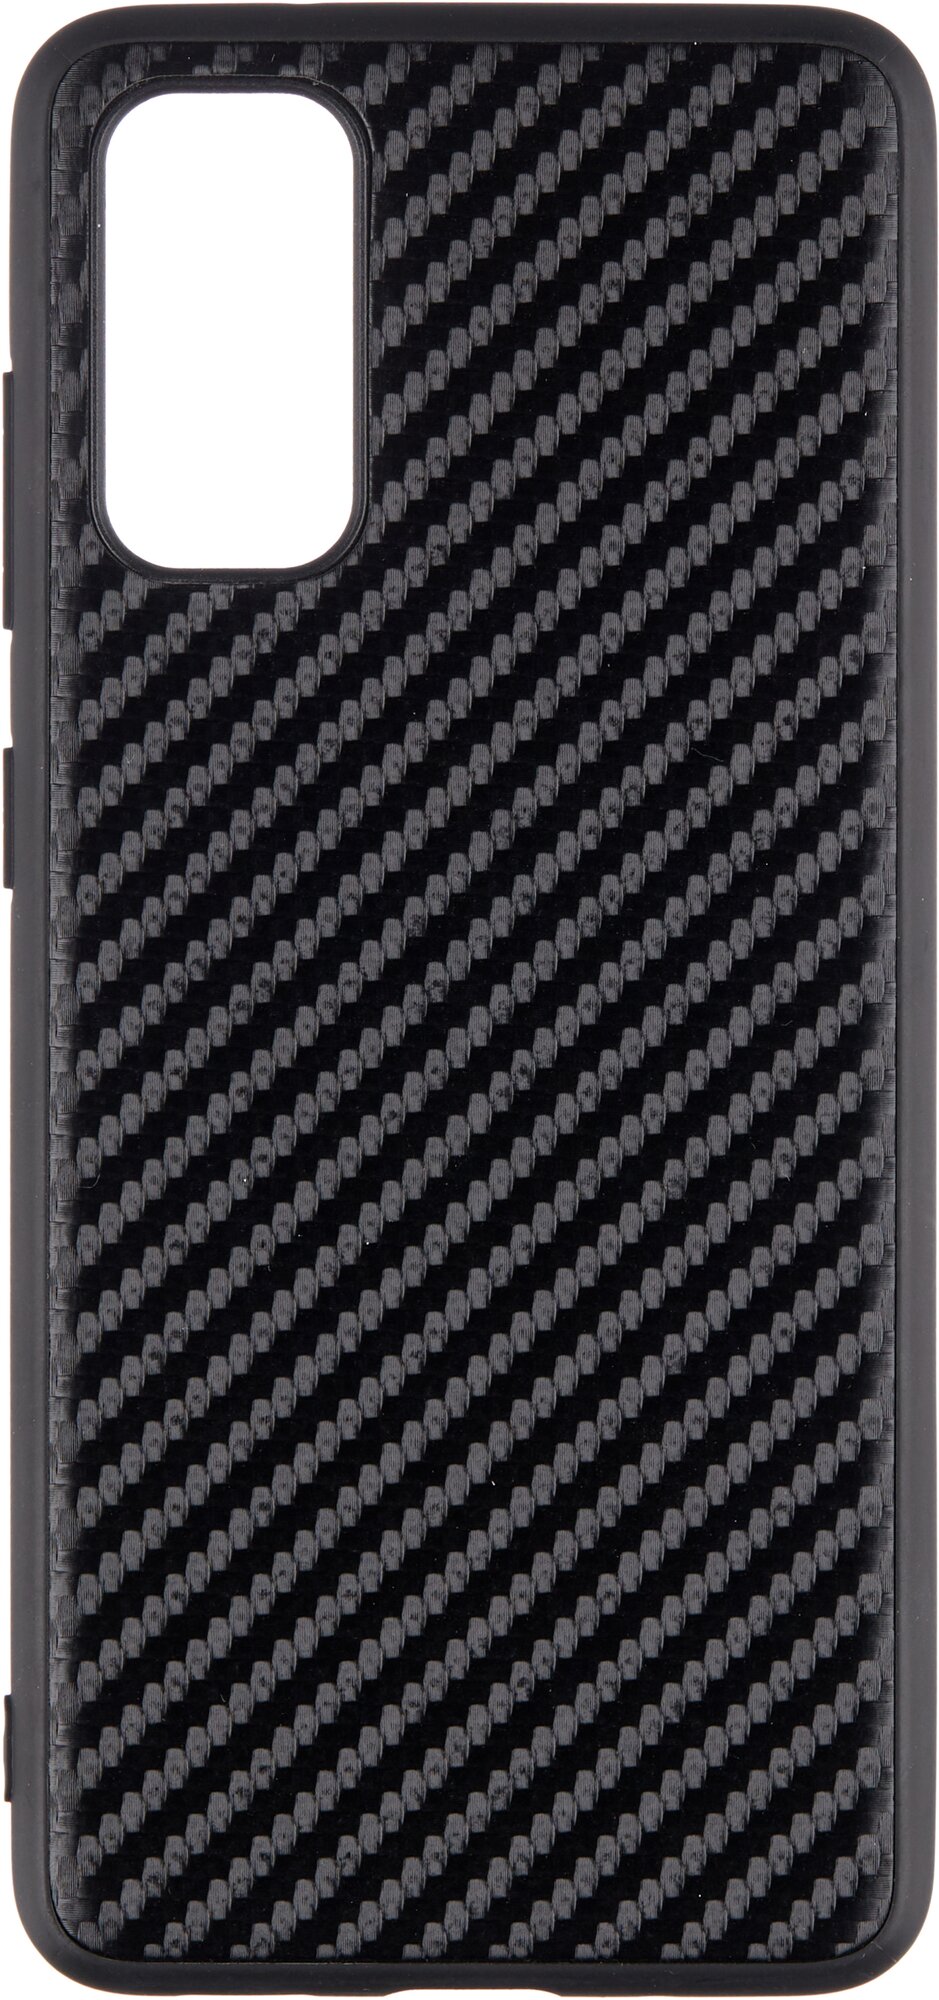 Чехол накладка для Samsung Galaxy S20 G-Case Carbon черная